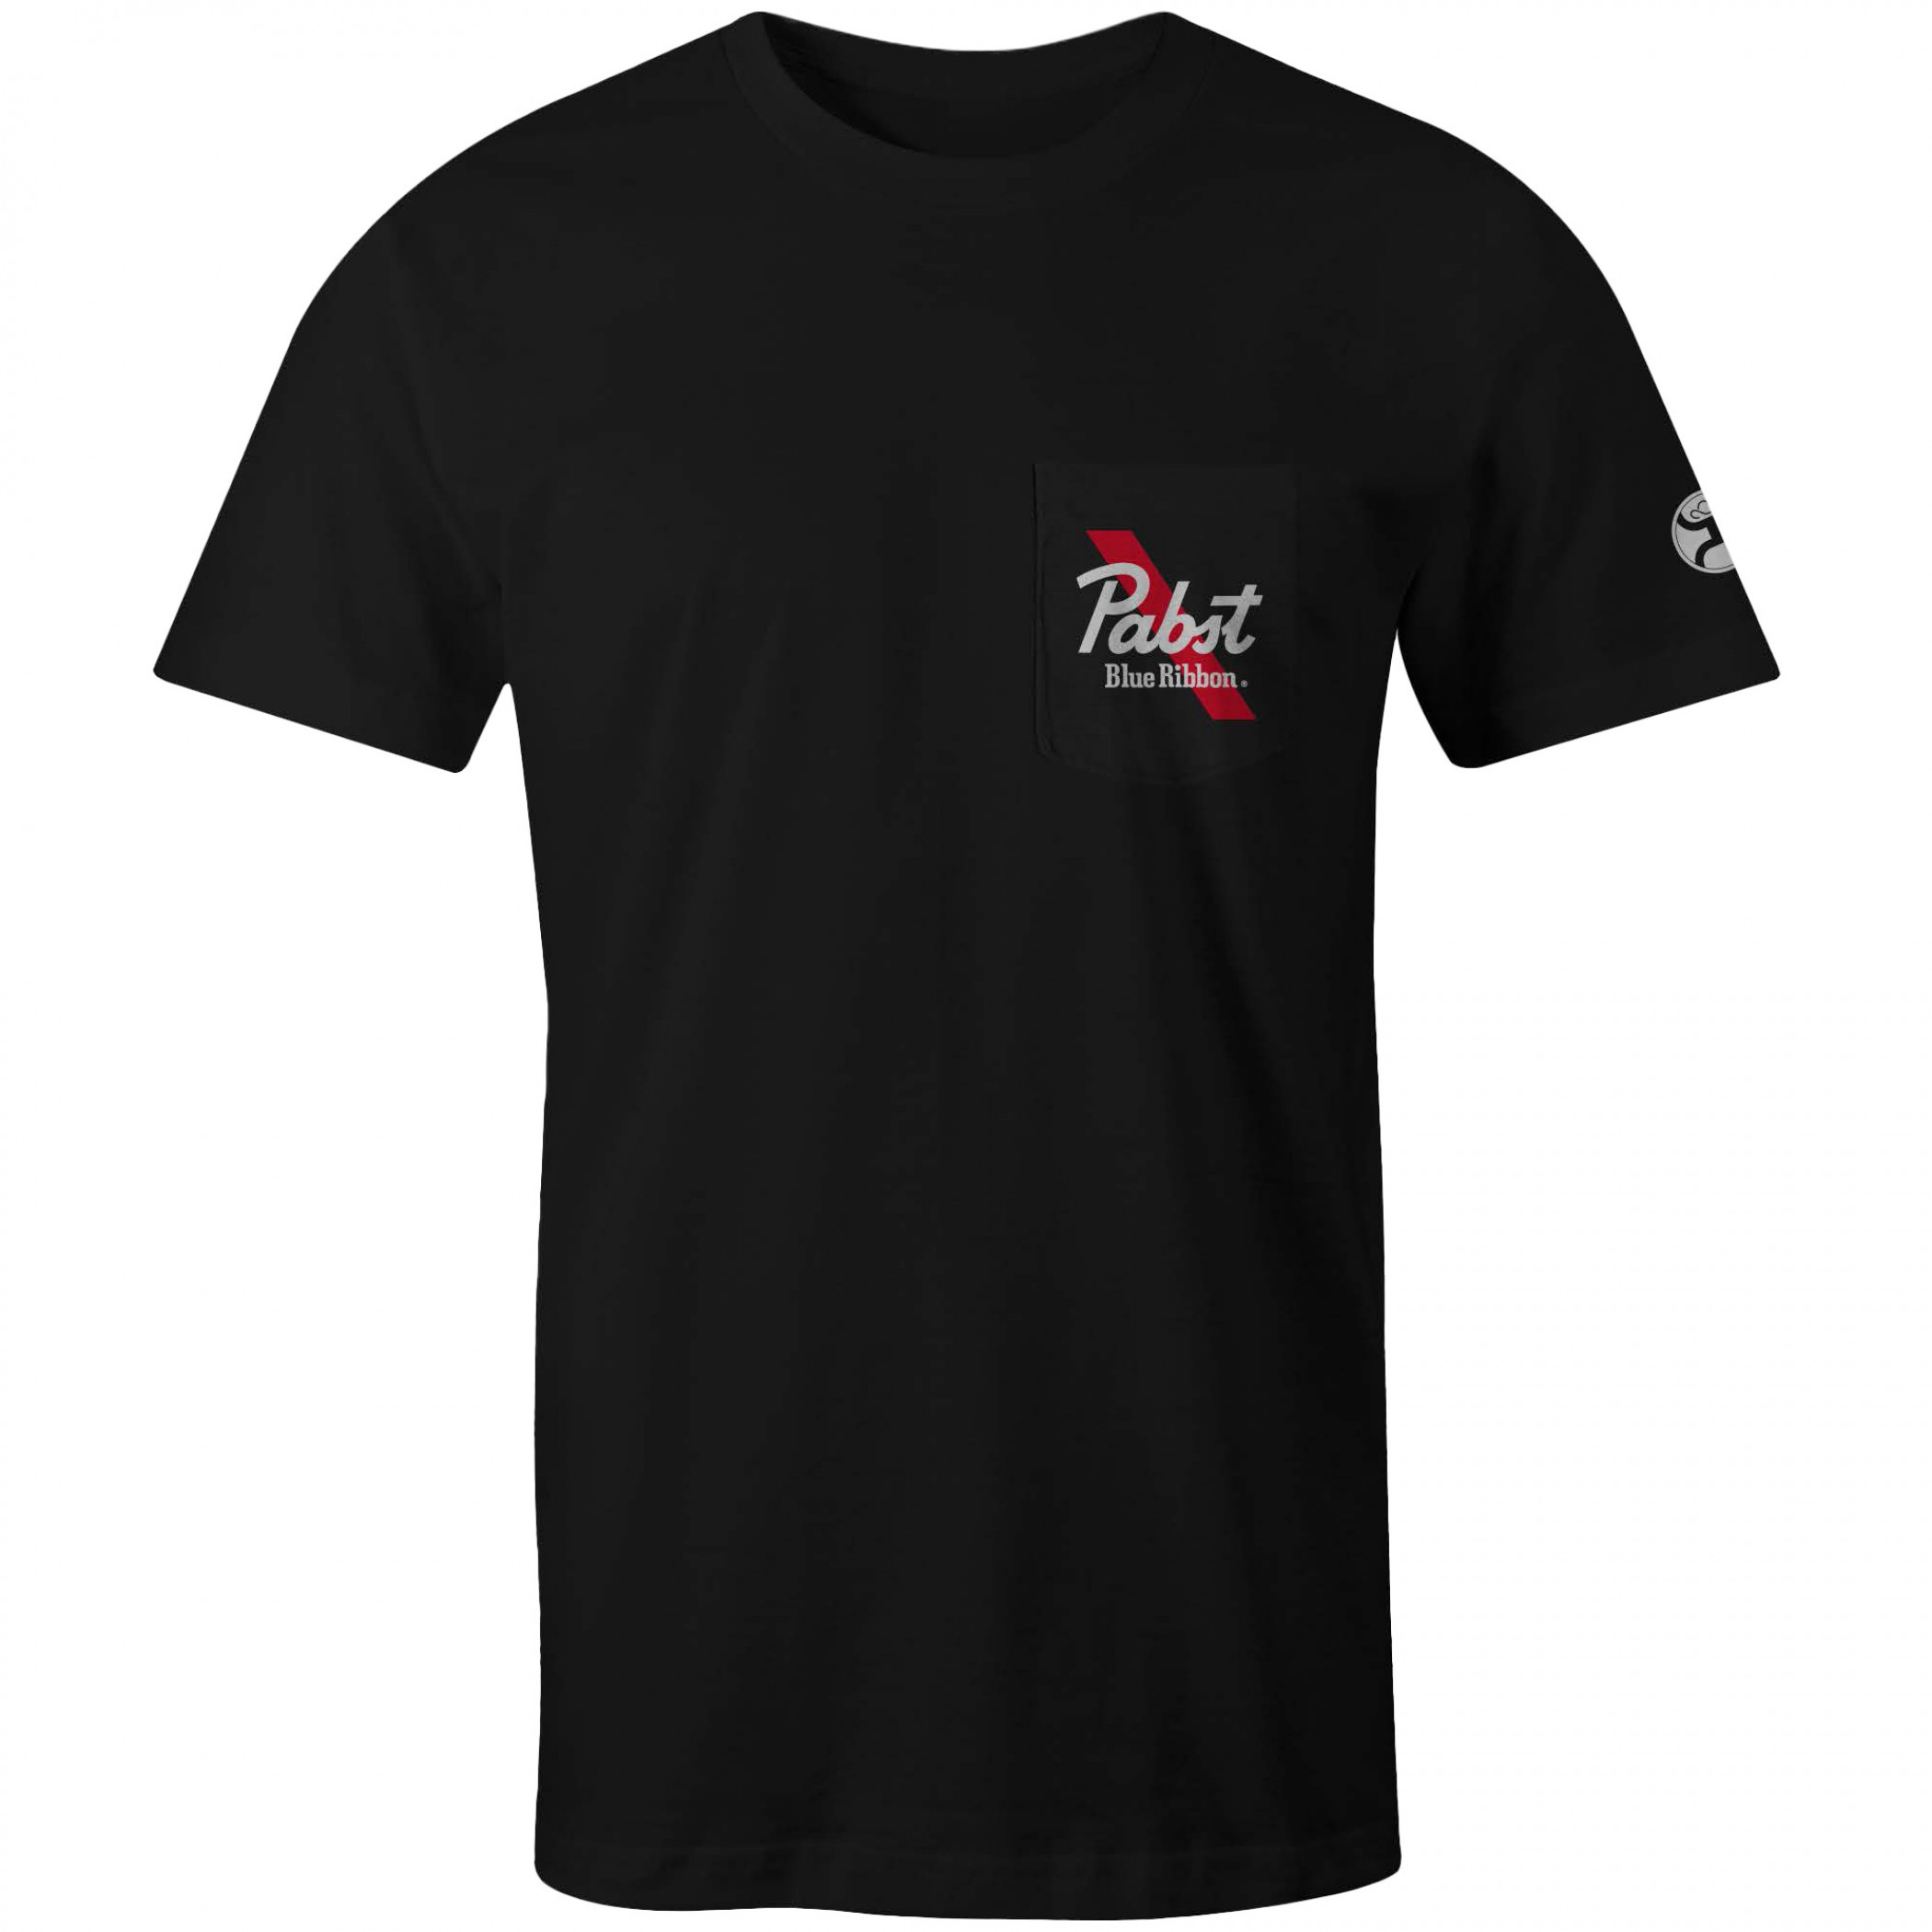 Pabst Blue Ribbon Logo Text Front and Back Print T-Shirt